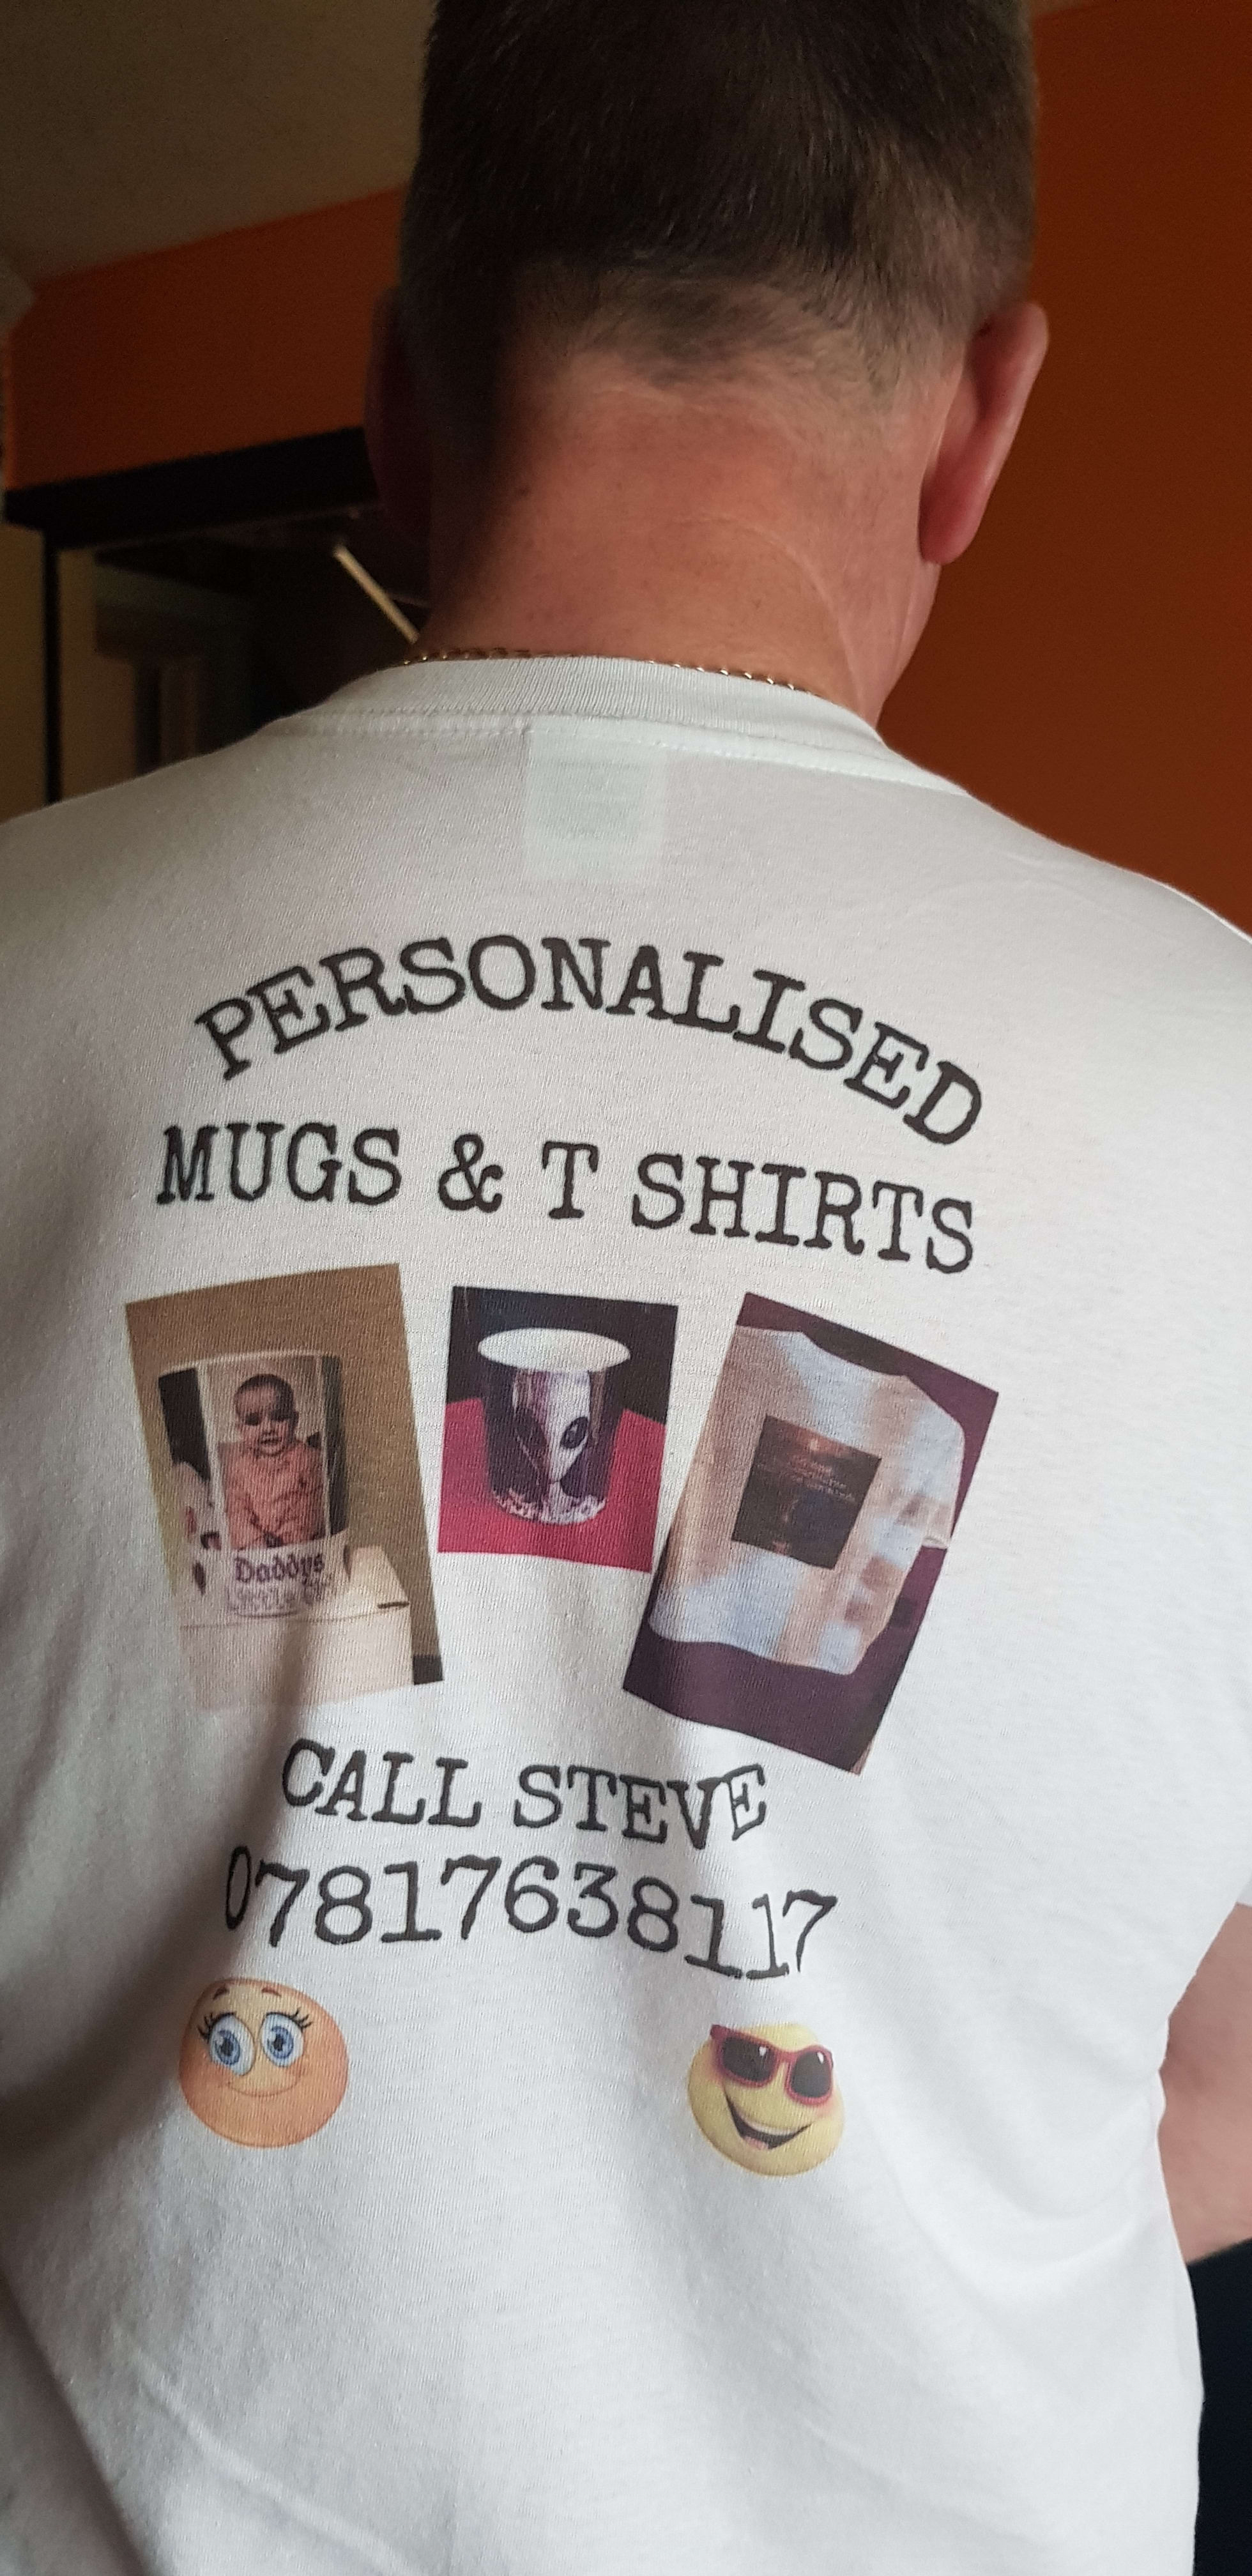 Steves Personalised T Shirts & Mugs